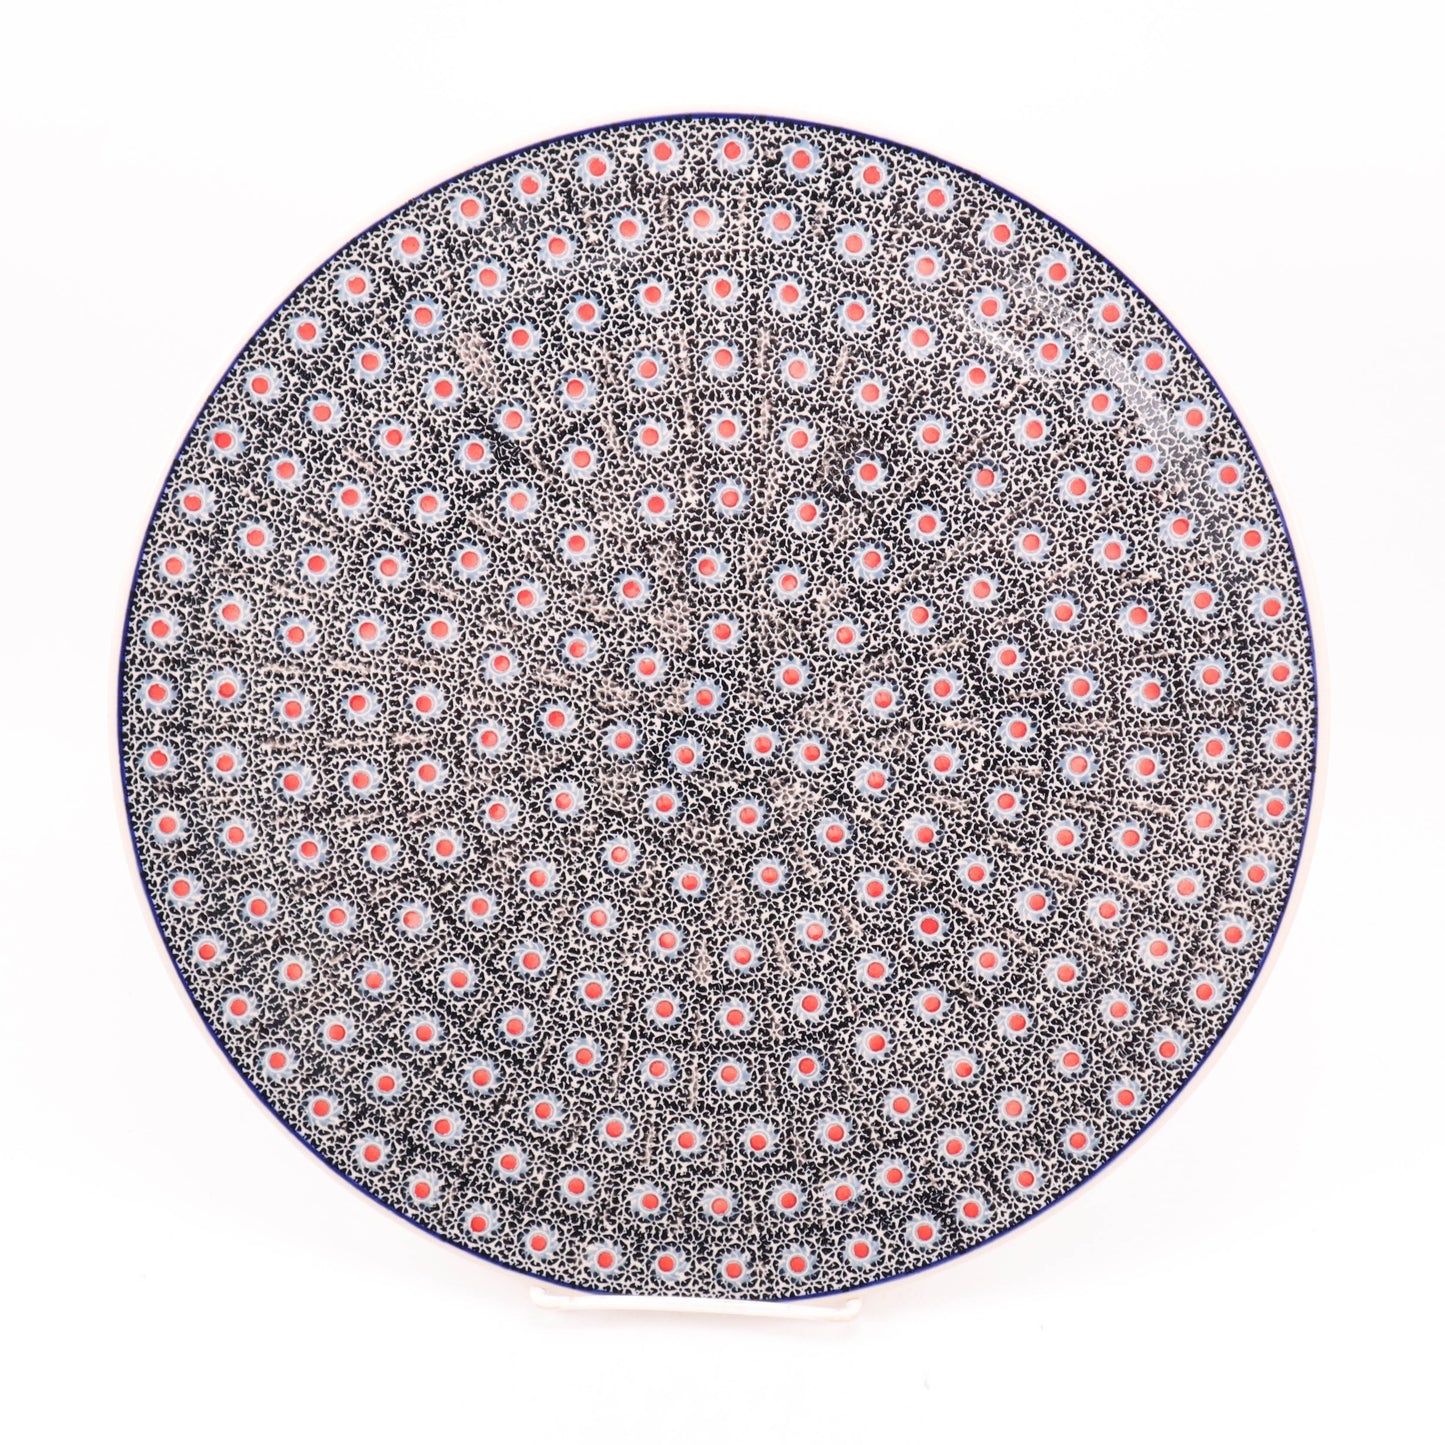 13" Pizza Plate. Pattern: Moonlight Posies